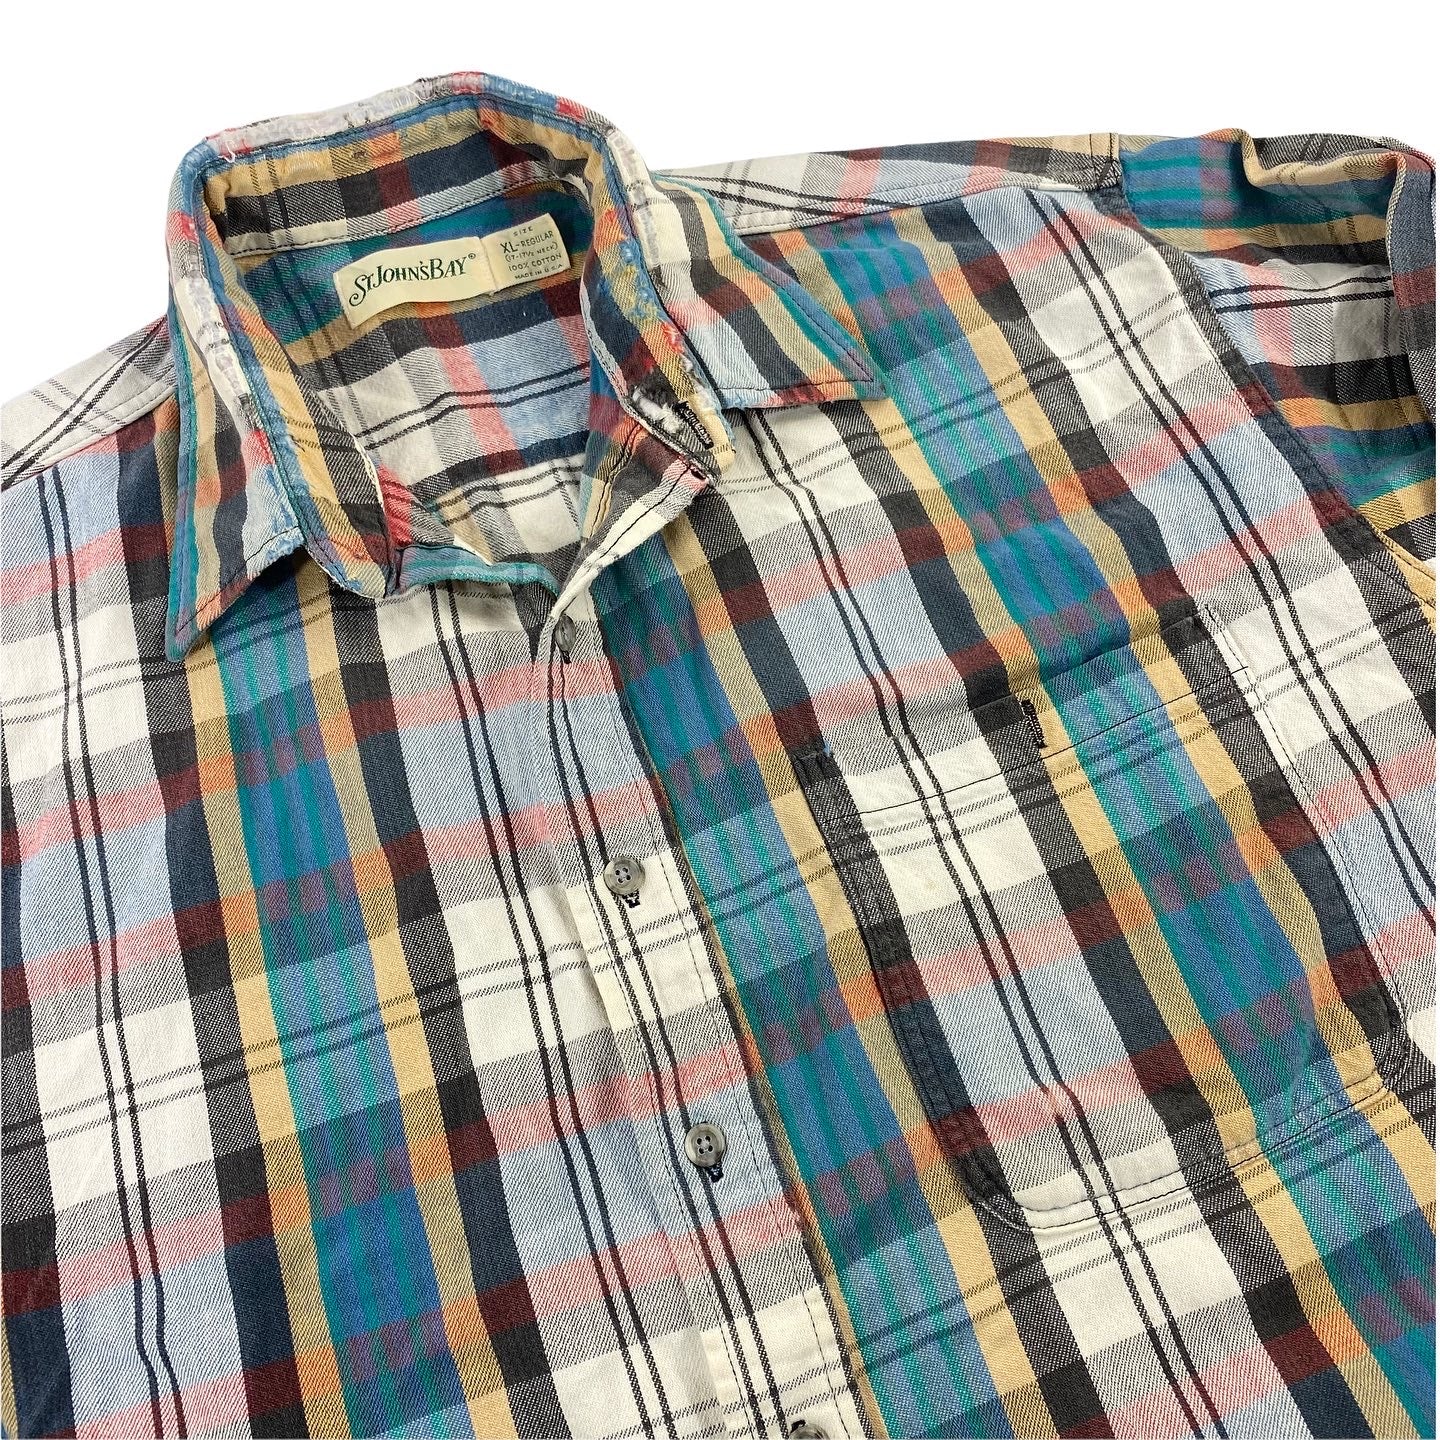 St. john’s bay plaid cotton shirt XL